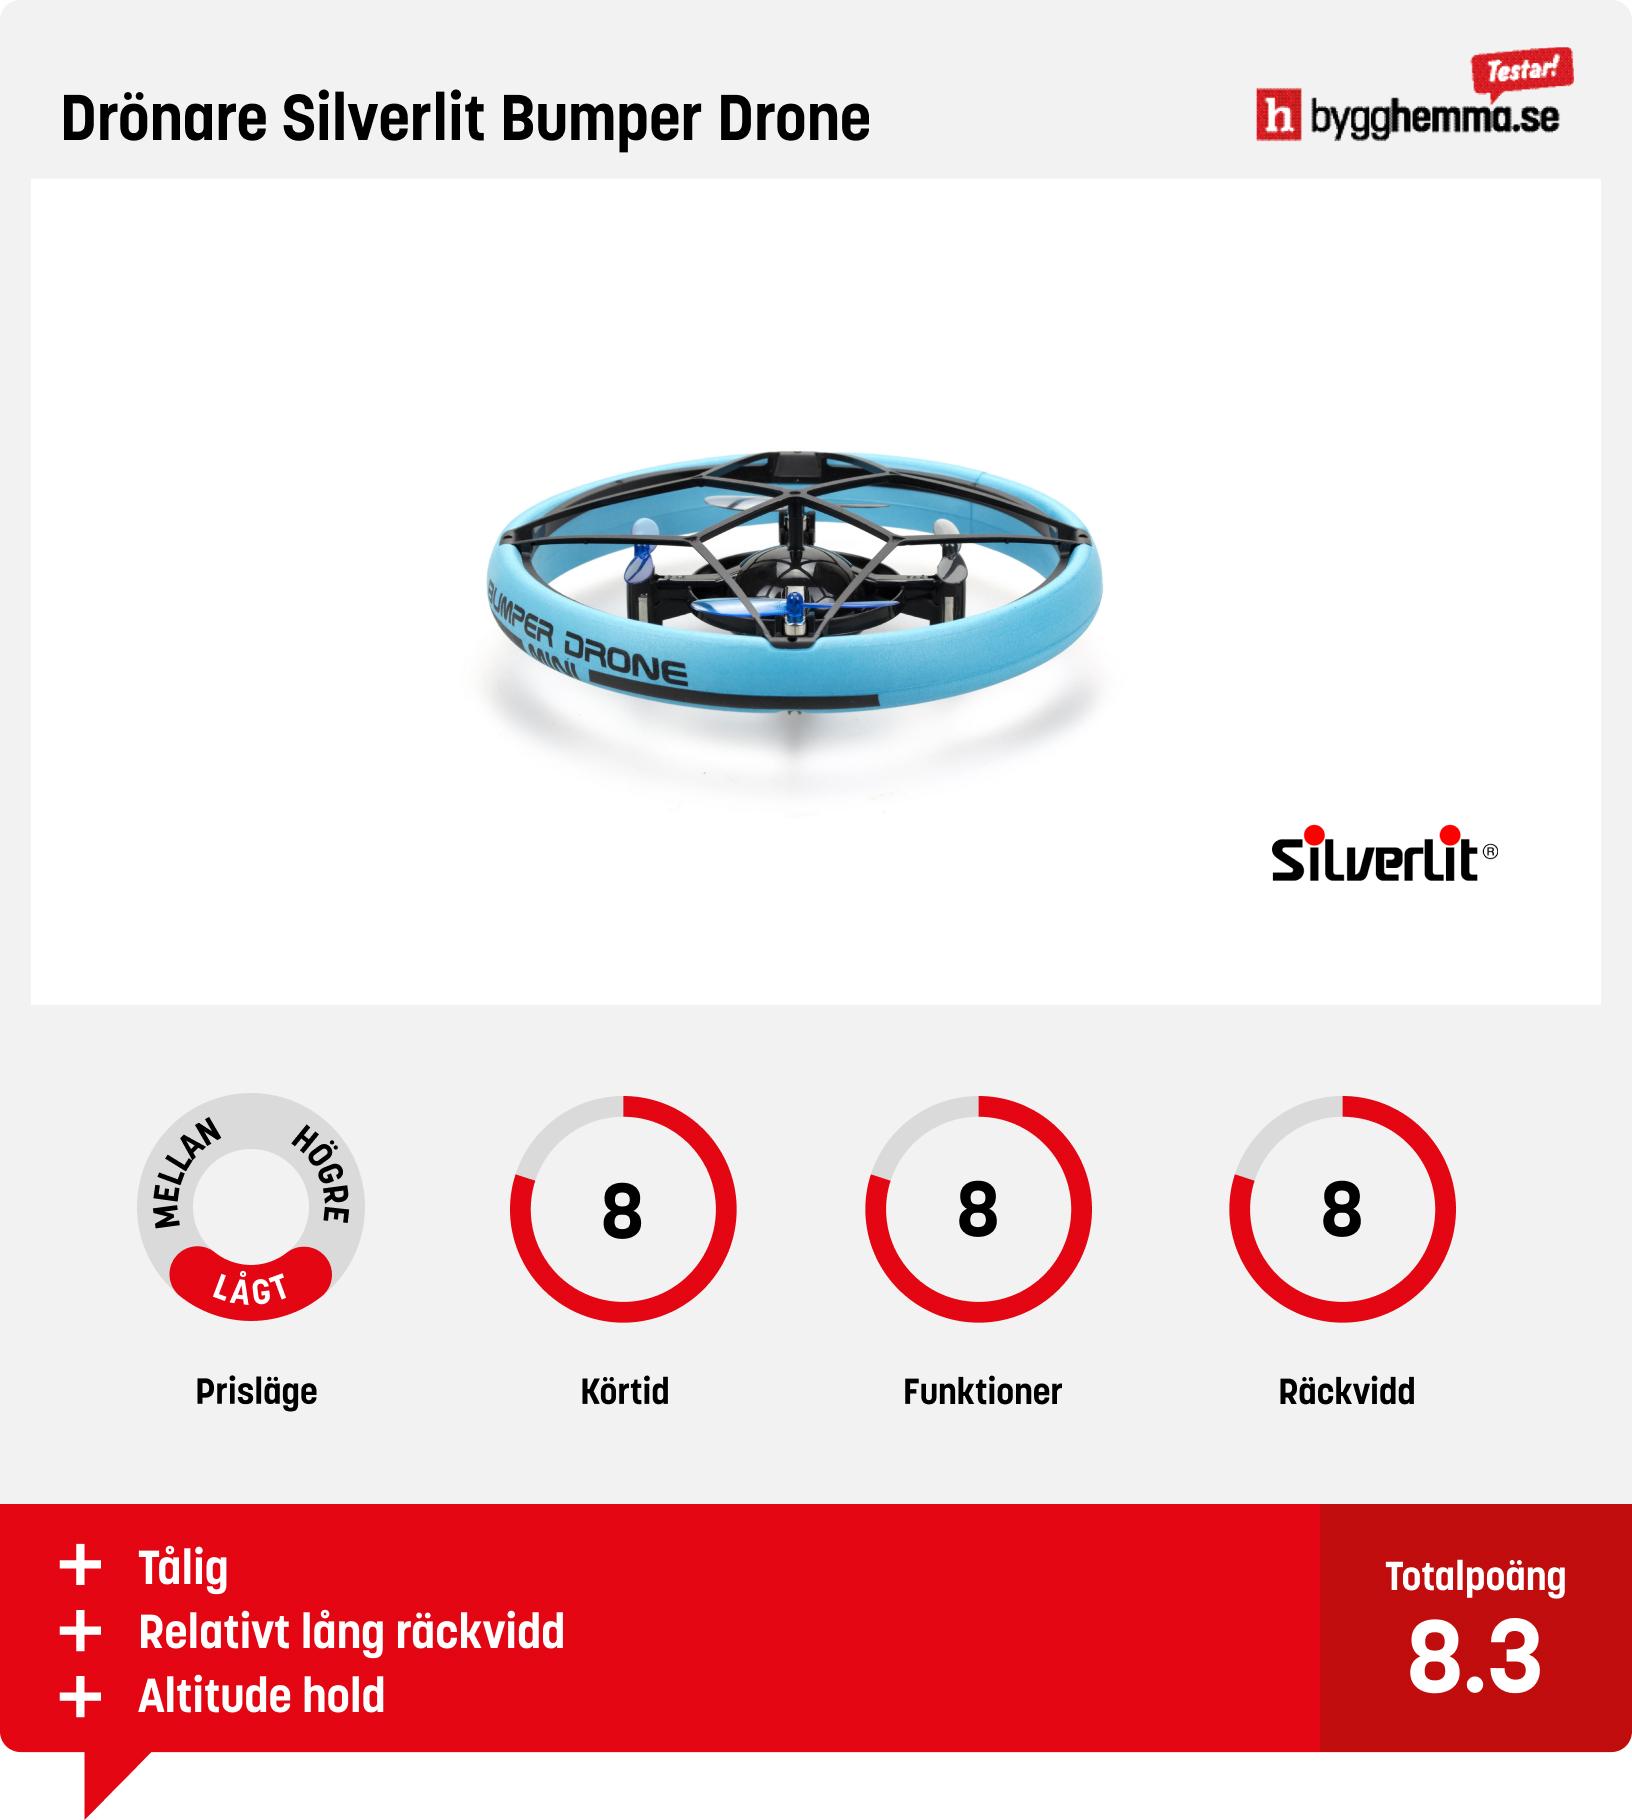 Drönare bäst i test budget - Drönare Silverlit Bumper Drone